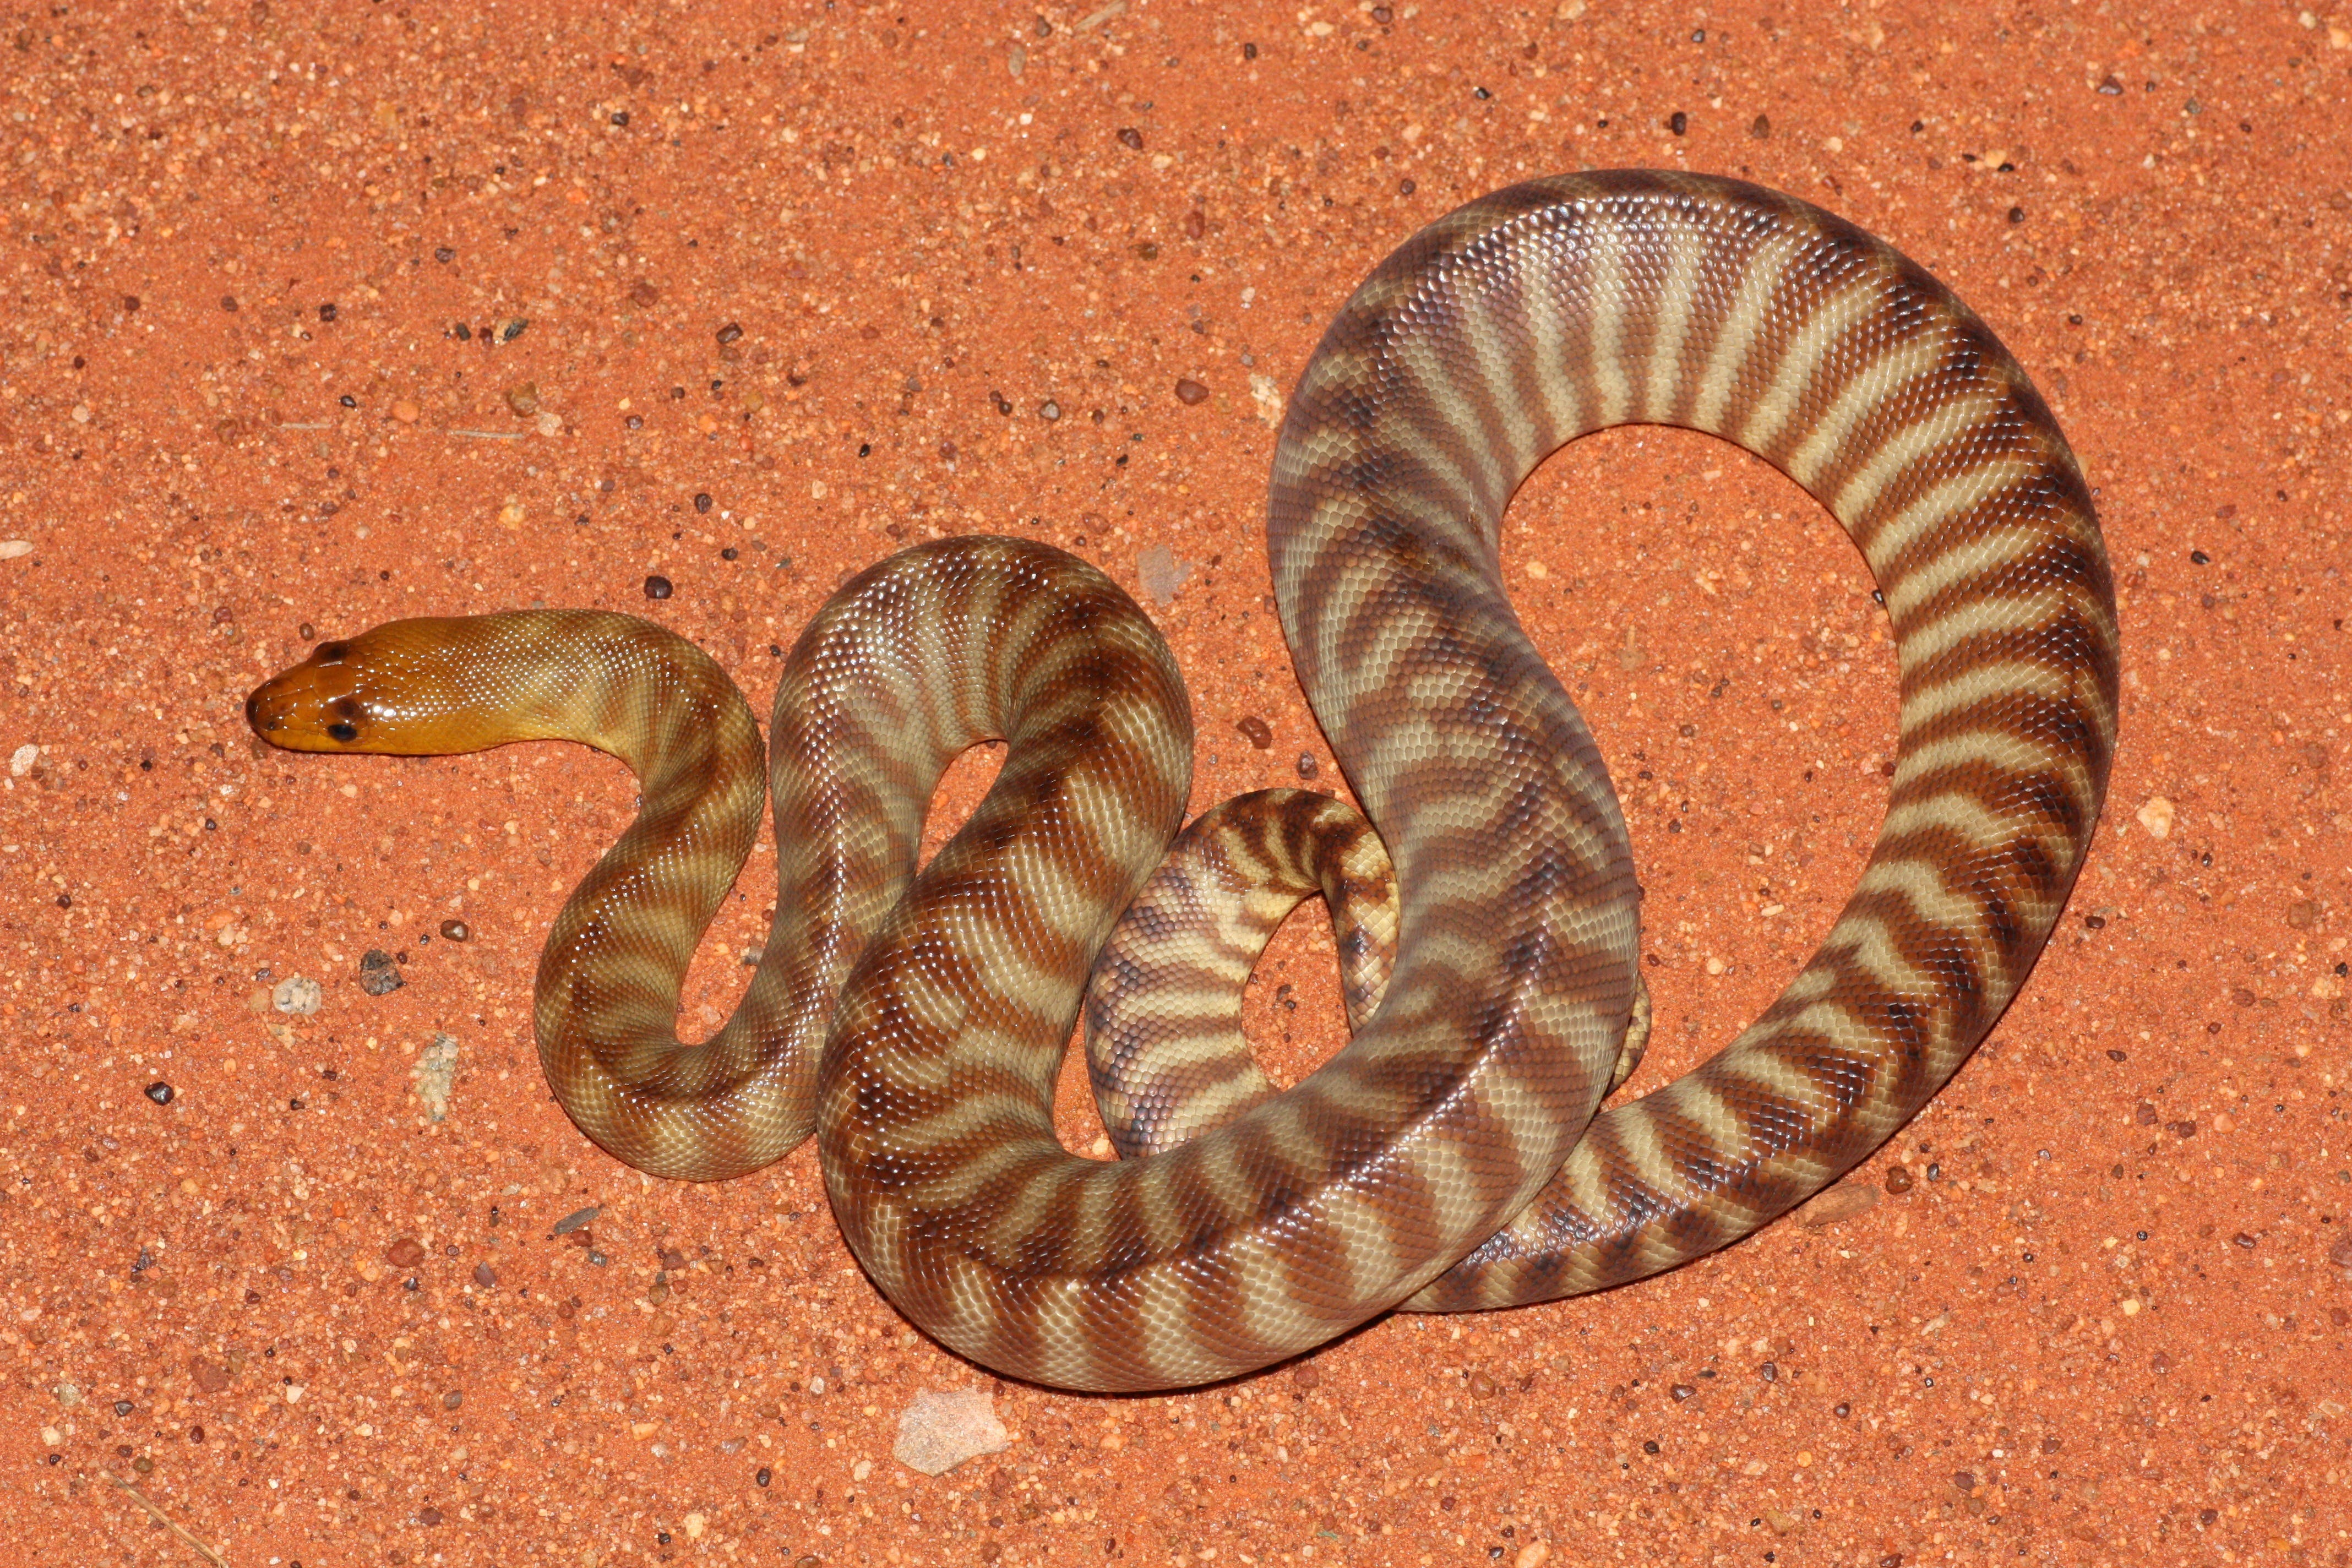 Red Desert Reptiles - Wagga Wagga Accommodation